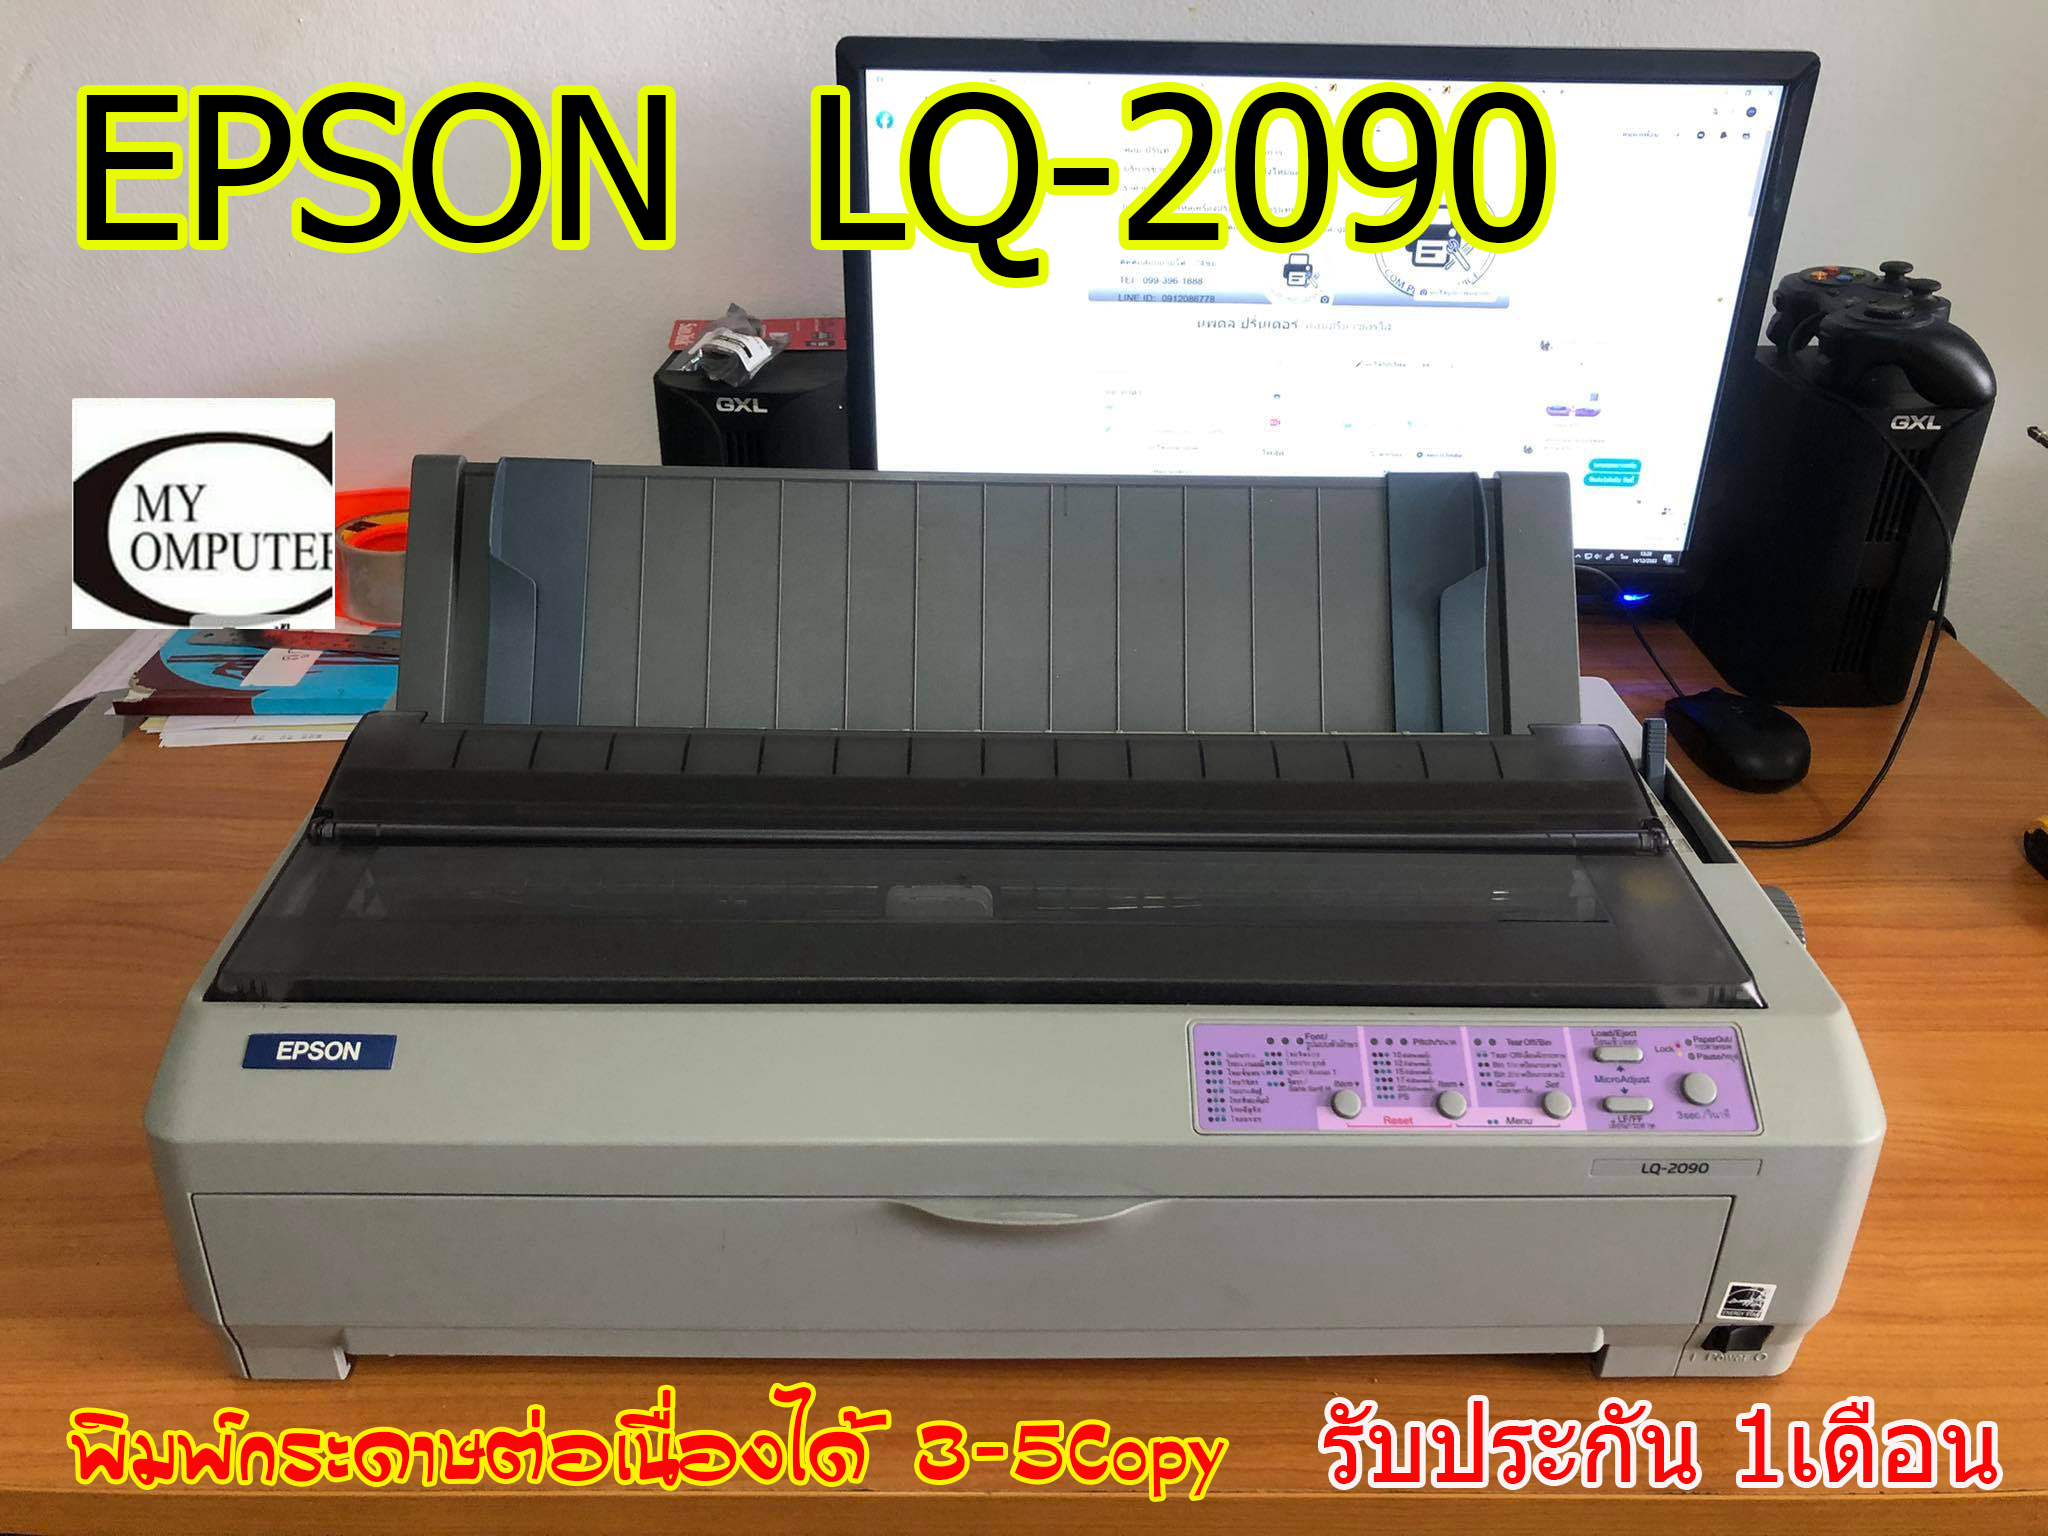 EPSON LQ-2090 พิมพ์กระดาษต่อเนื่อง 3-5Copy // สภาพดีมาก เหมือนใหม่ คุ้มสุดๆ // มีประกันให้ 1เดือน